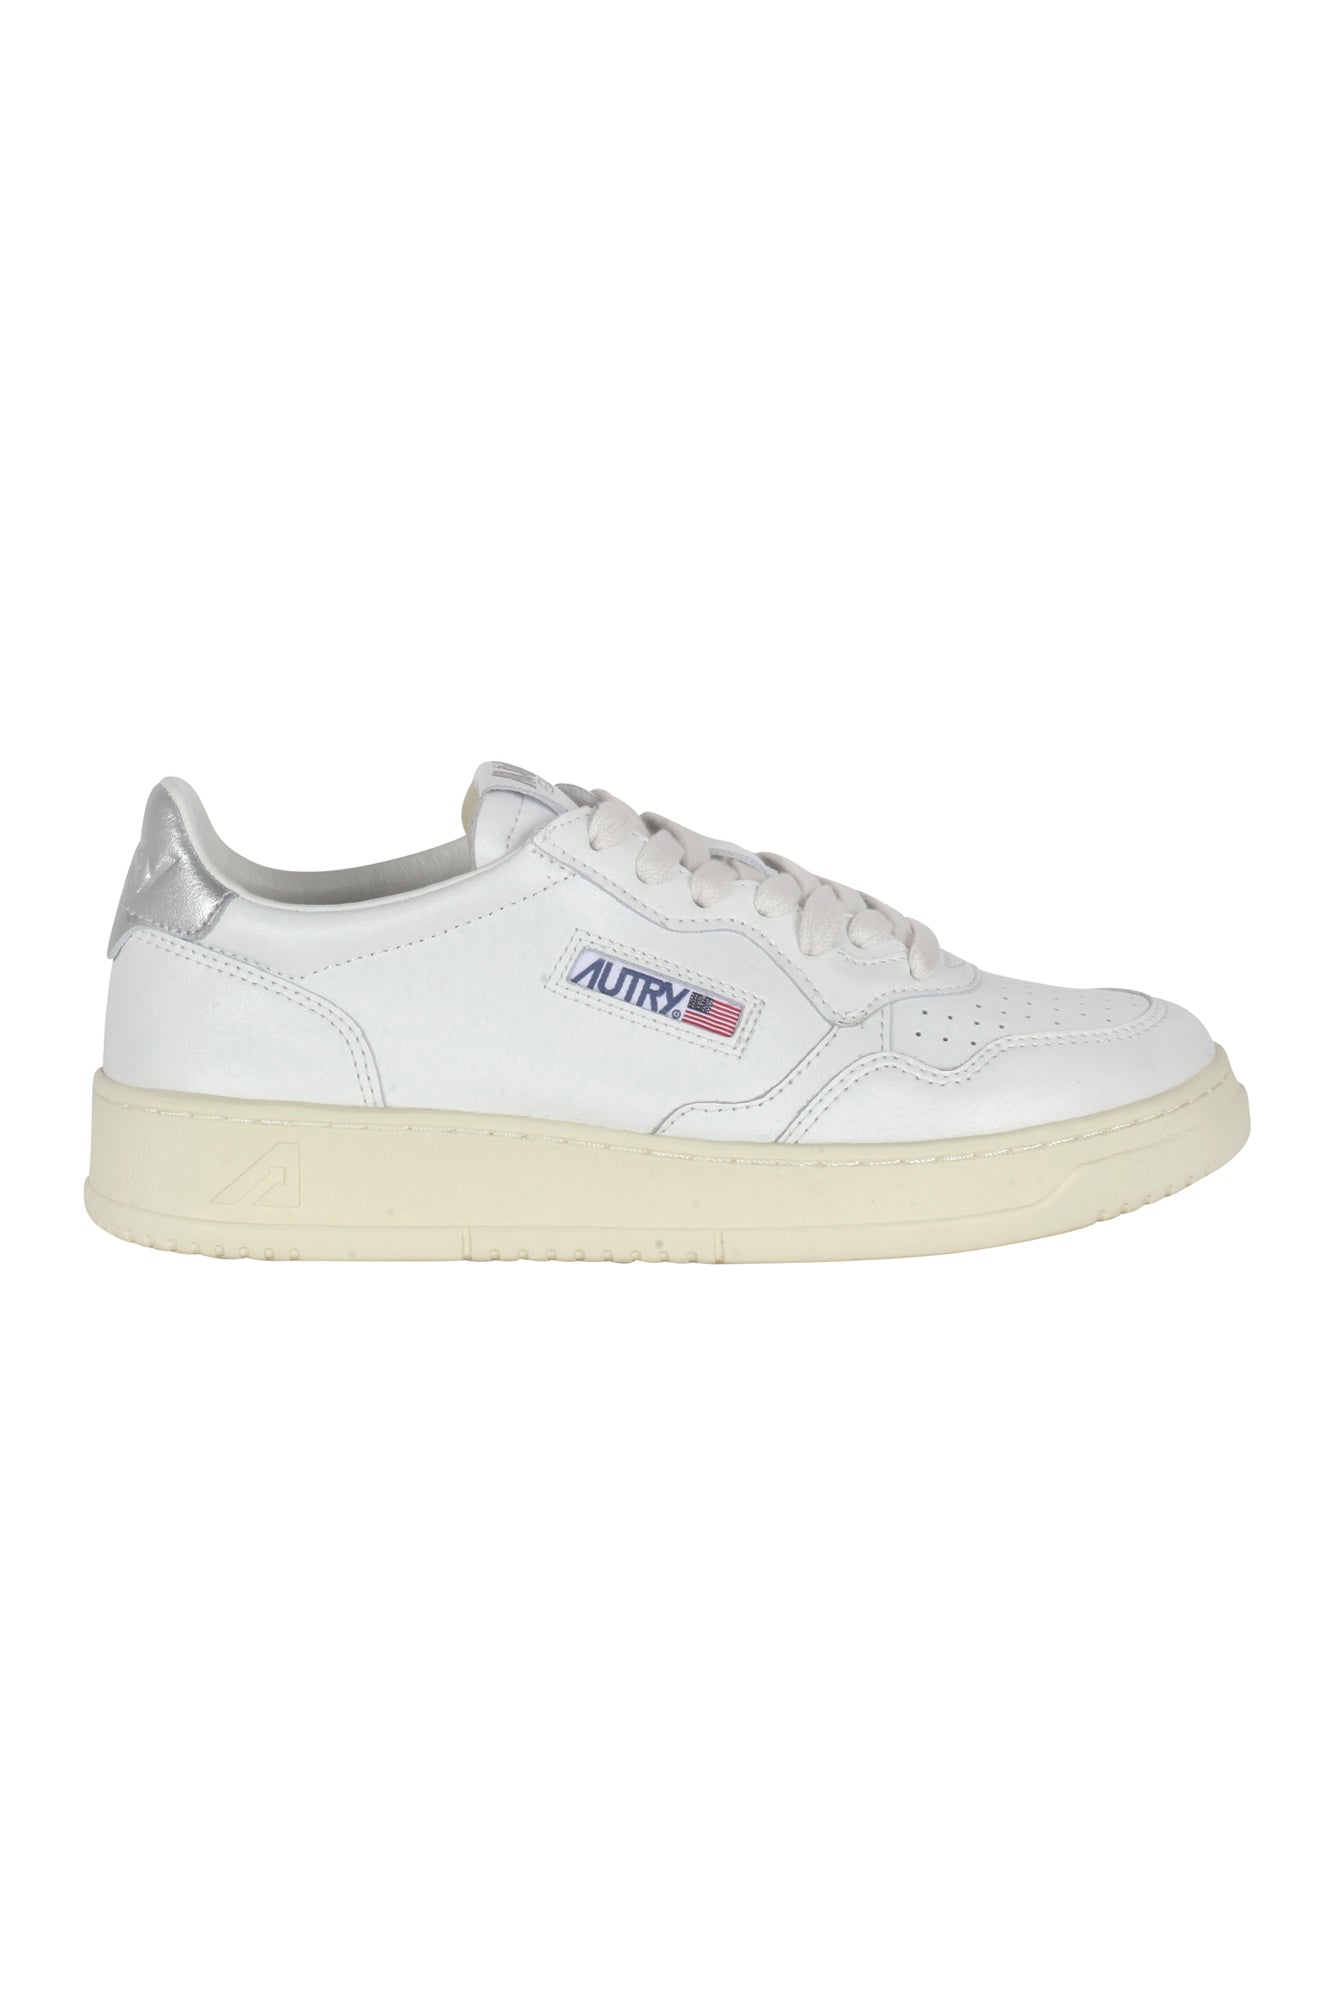 Autry - Sneakers - 430027 - Bianco/Argento